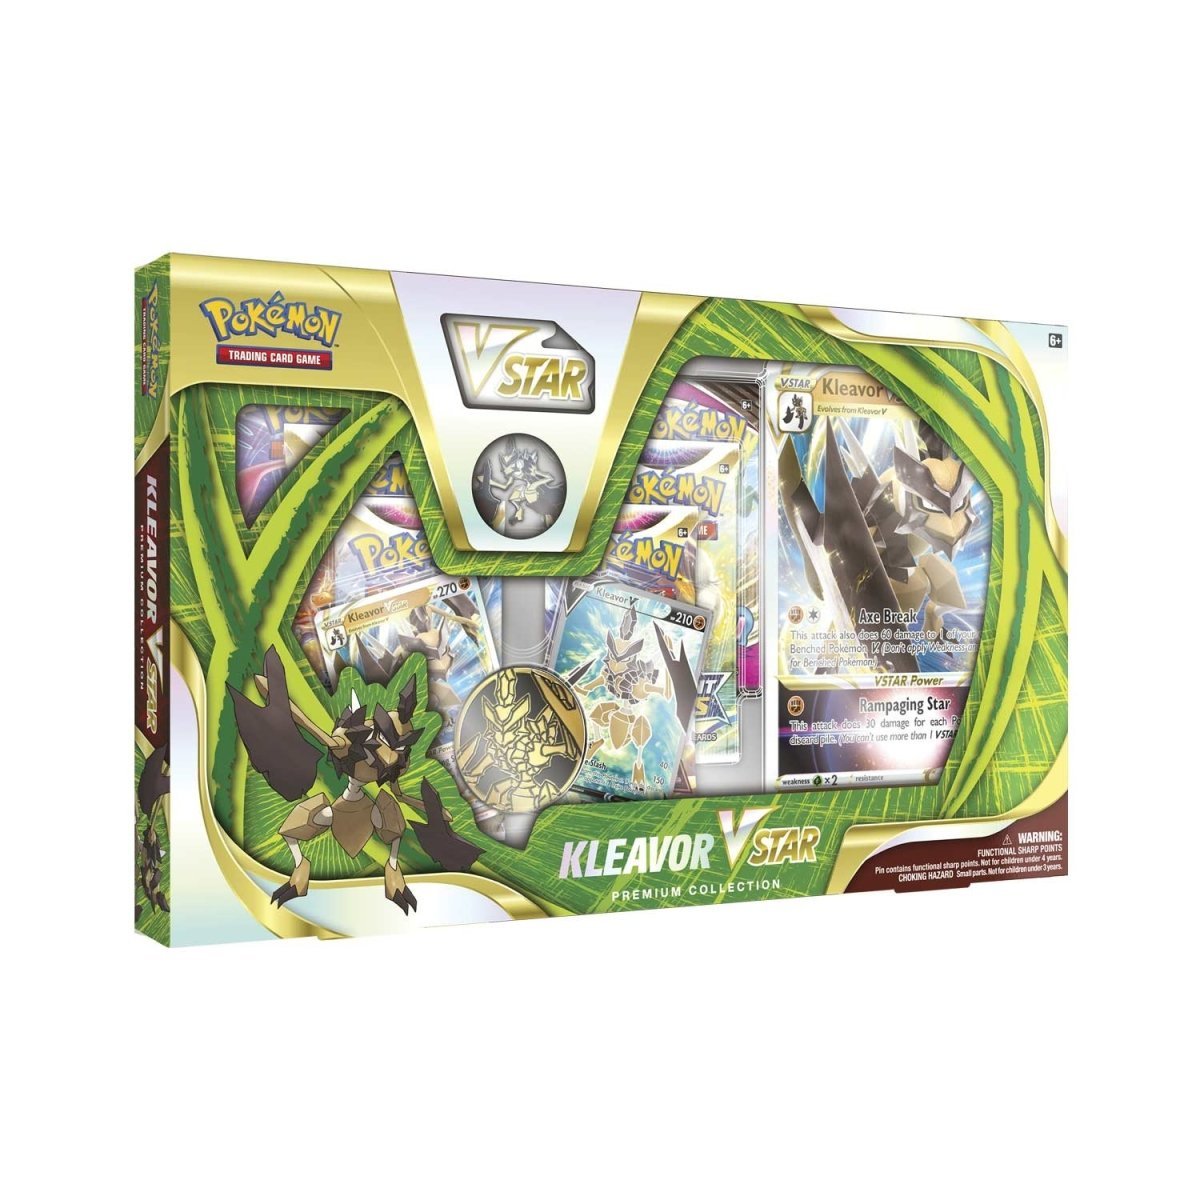 Pokémon TCG: Kleavor VSTAR Premium Collection Box - PokeRvm